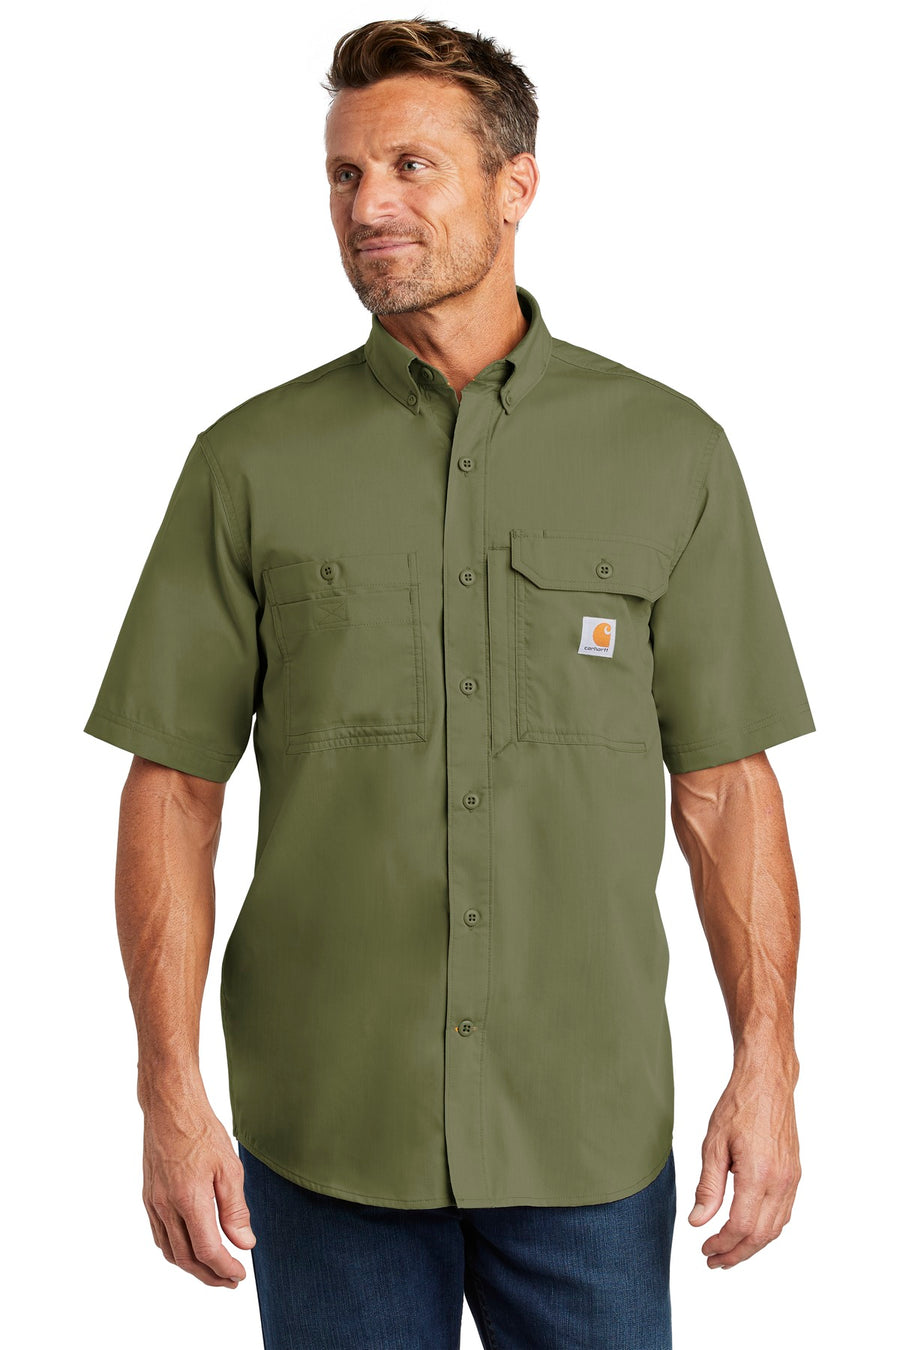 Carhartt Force Ridgefield Solid Short Sleeve Shirt.